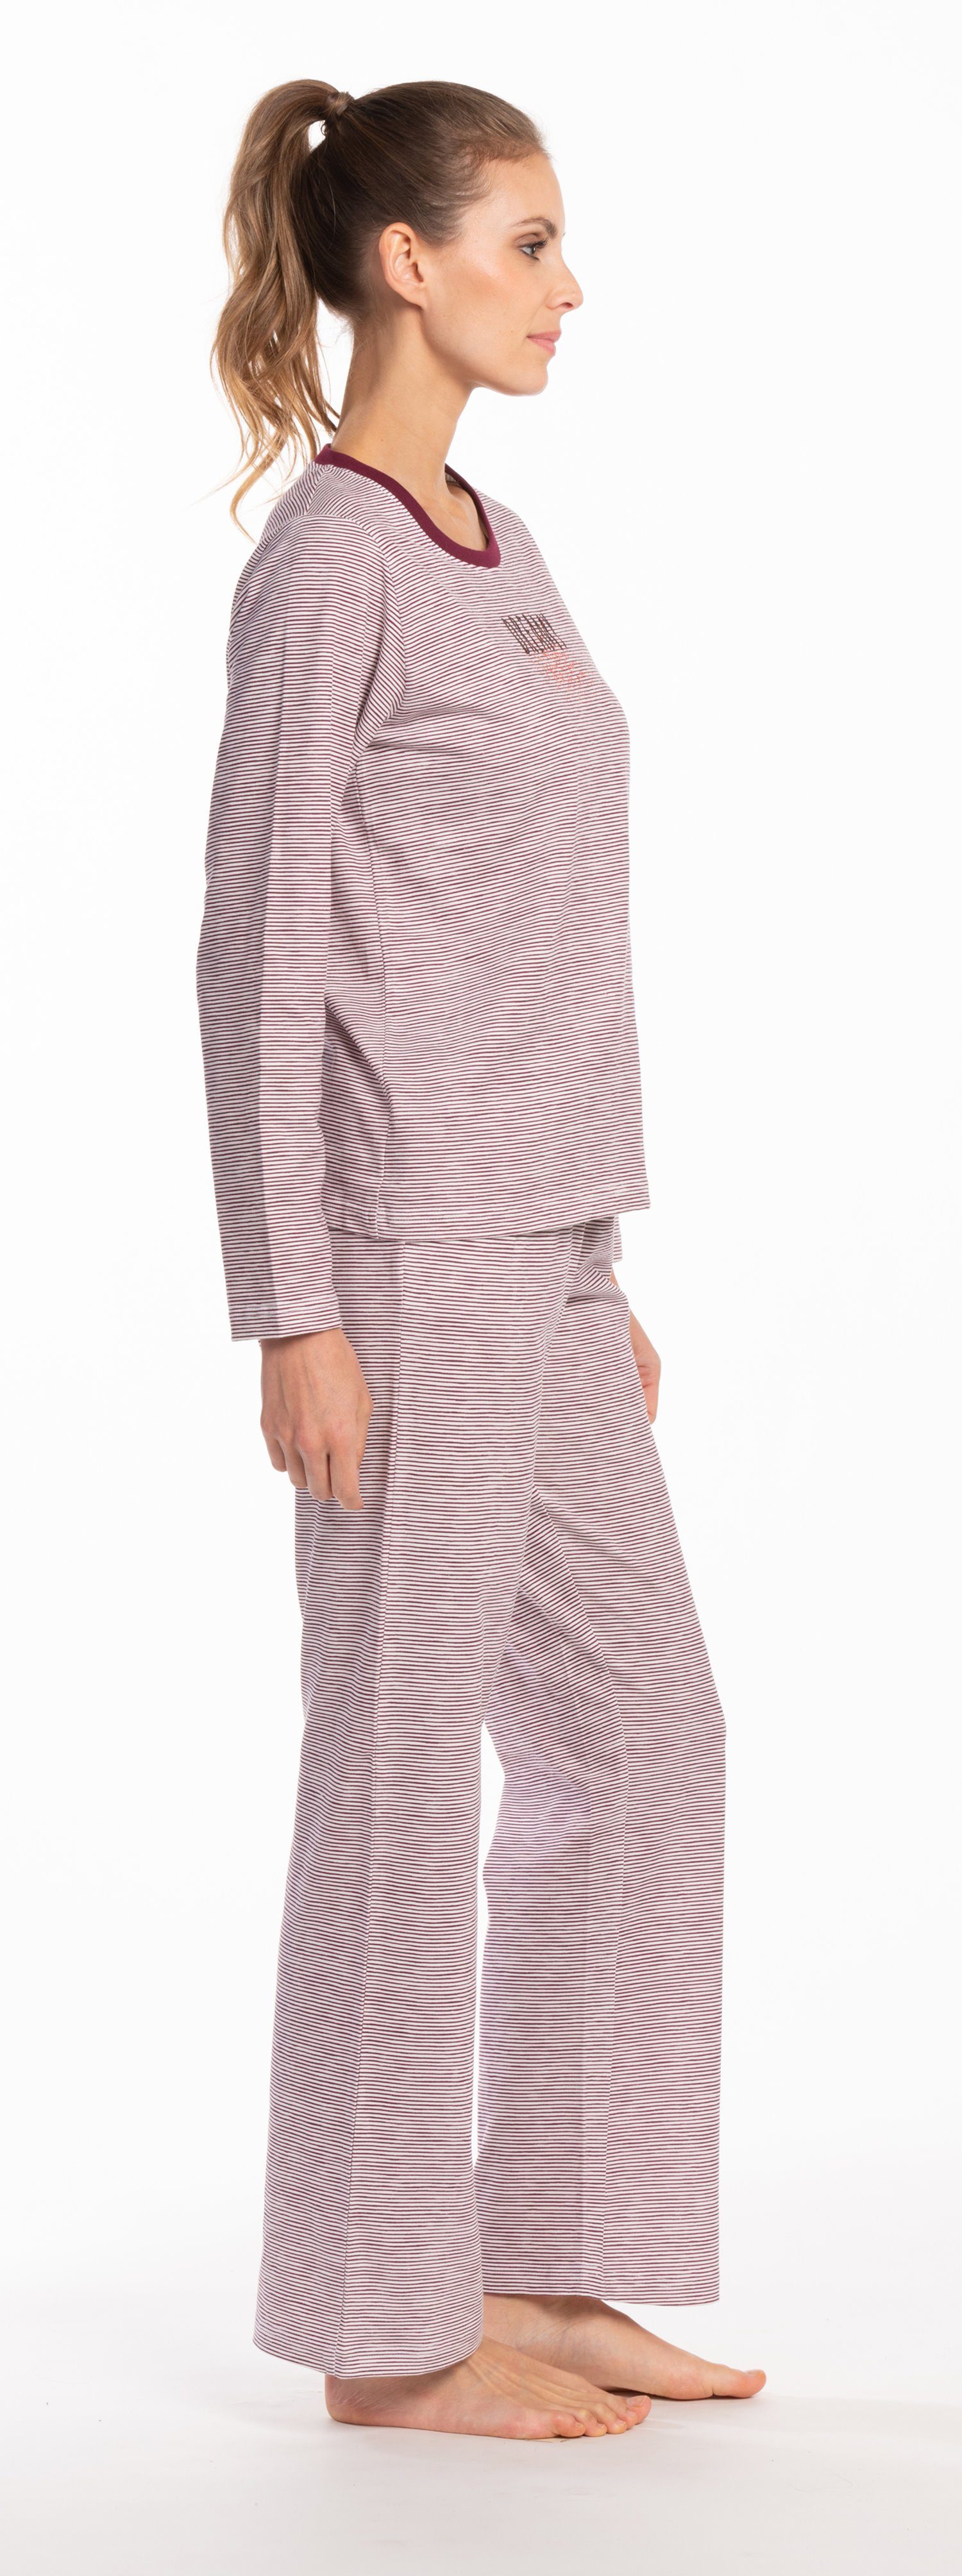 Schlafanzug Baumwolle (2 Damen Eskimo tlg) Schlafanzug